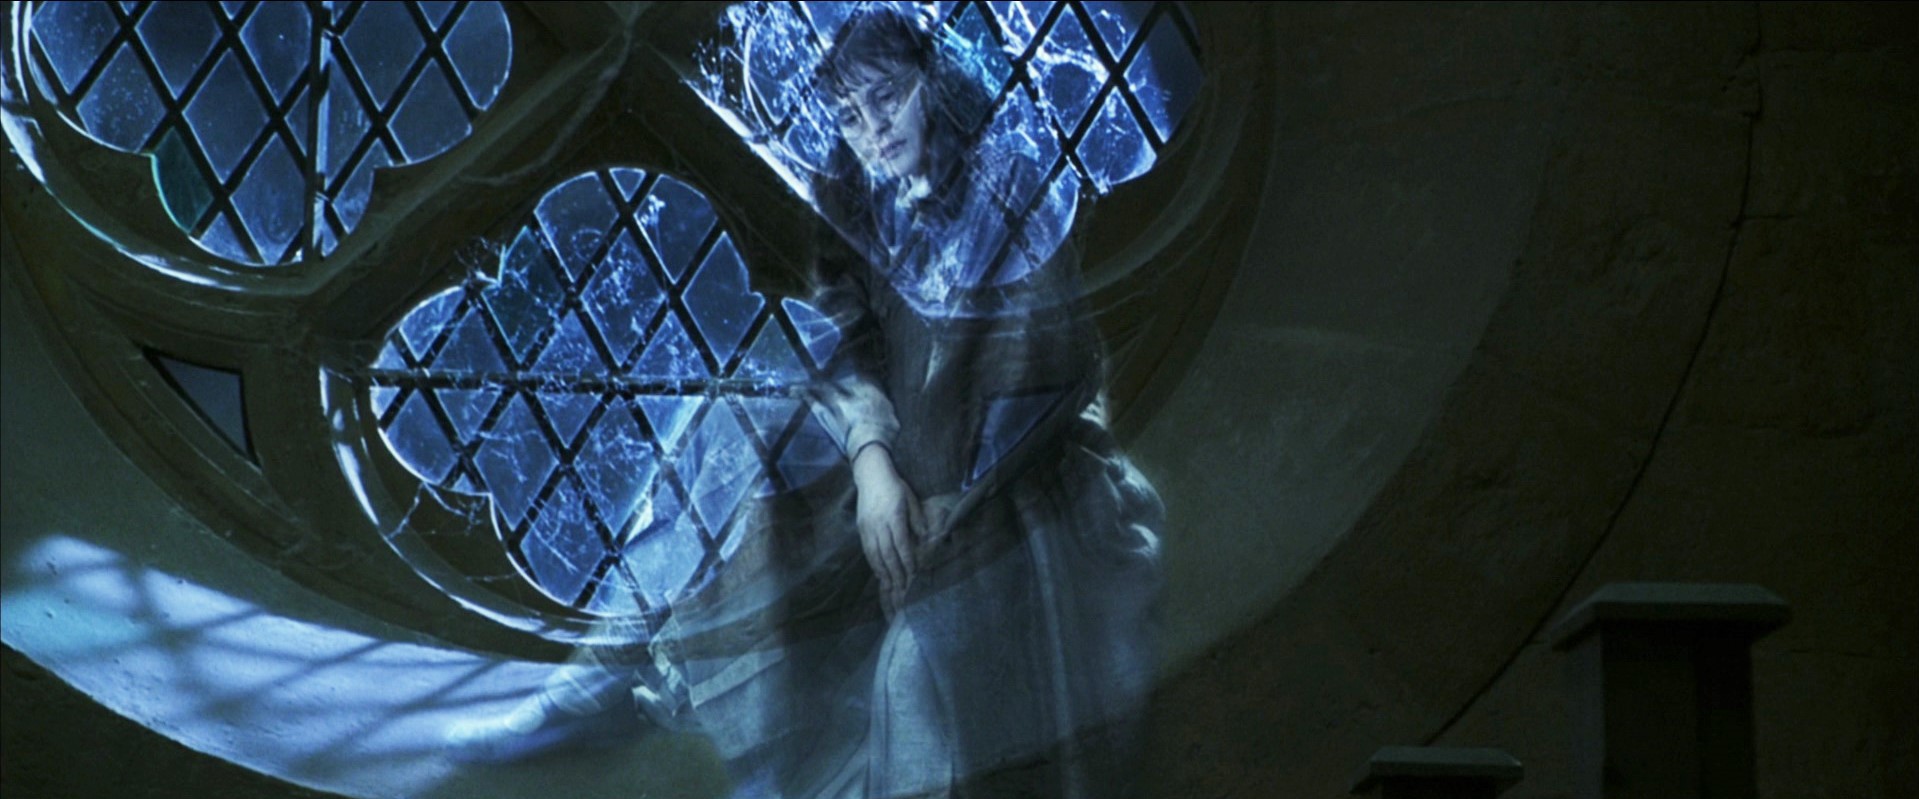 Hermione Granger – harrypotterheg